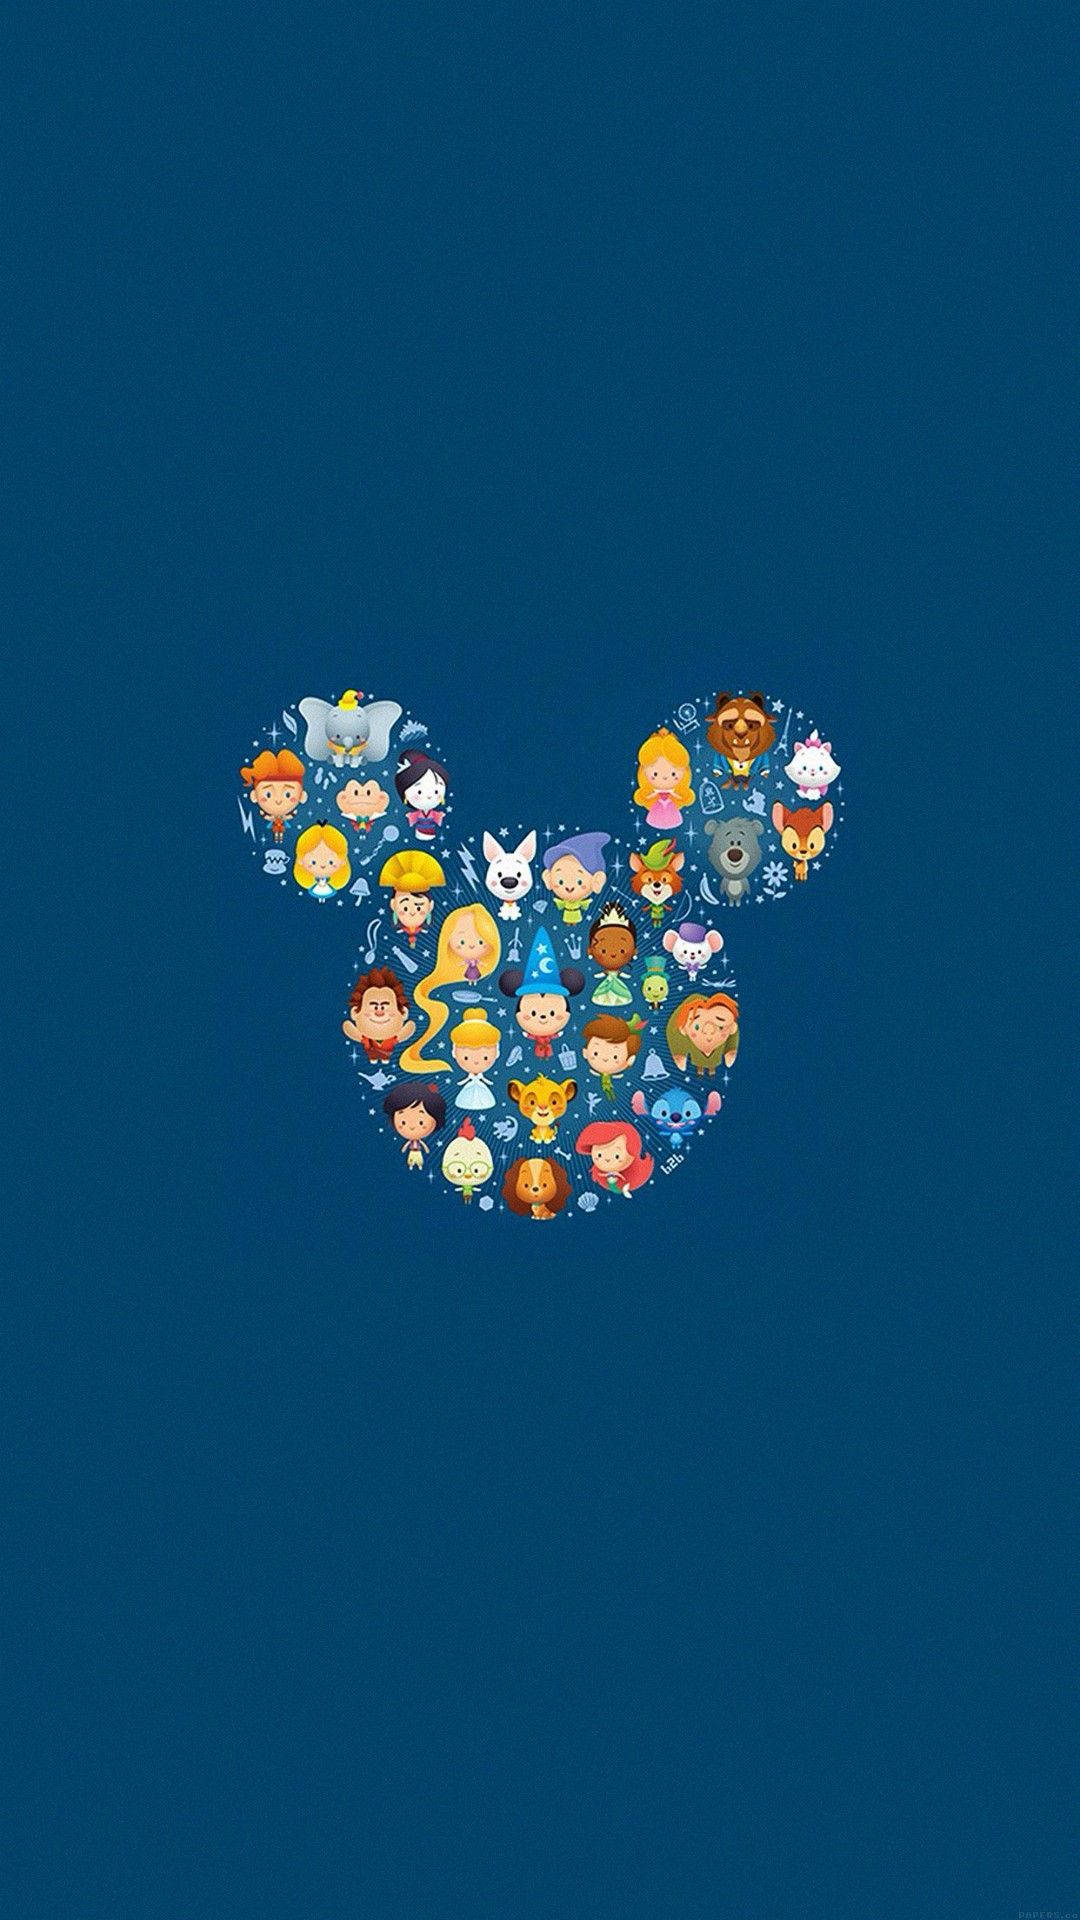 Cute Disney Characters In Mickey